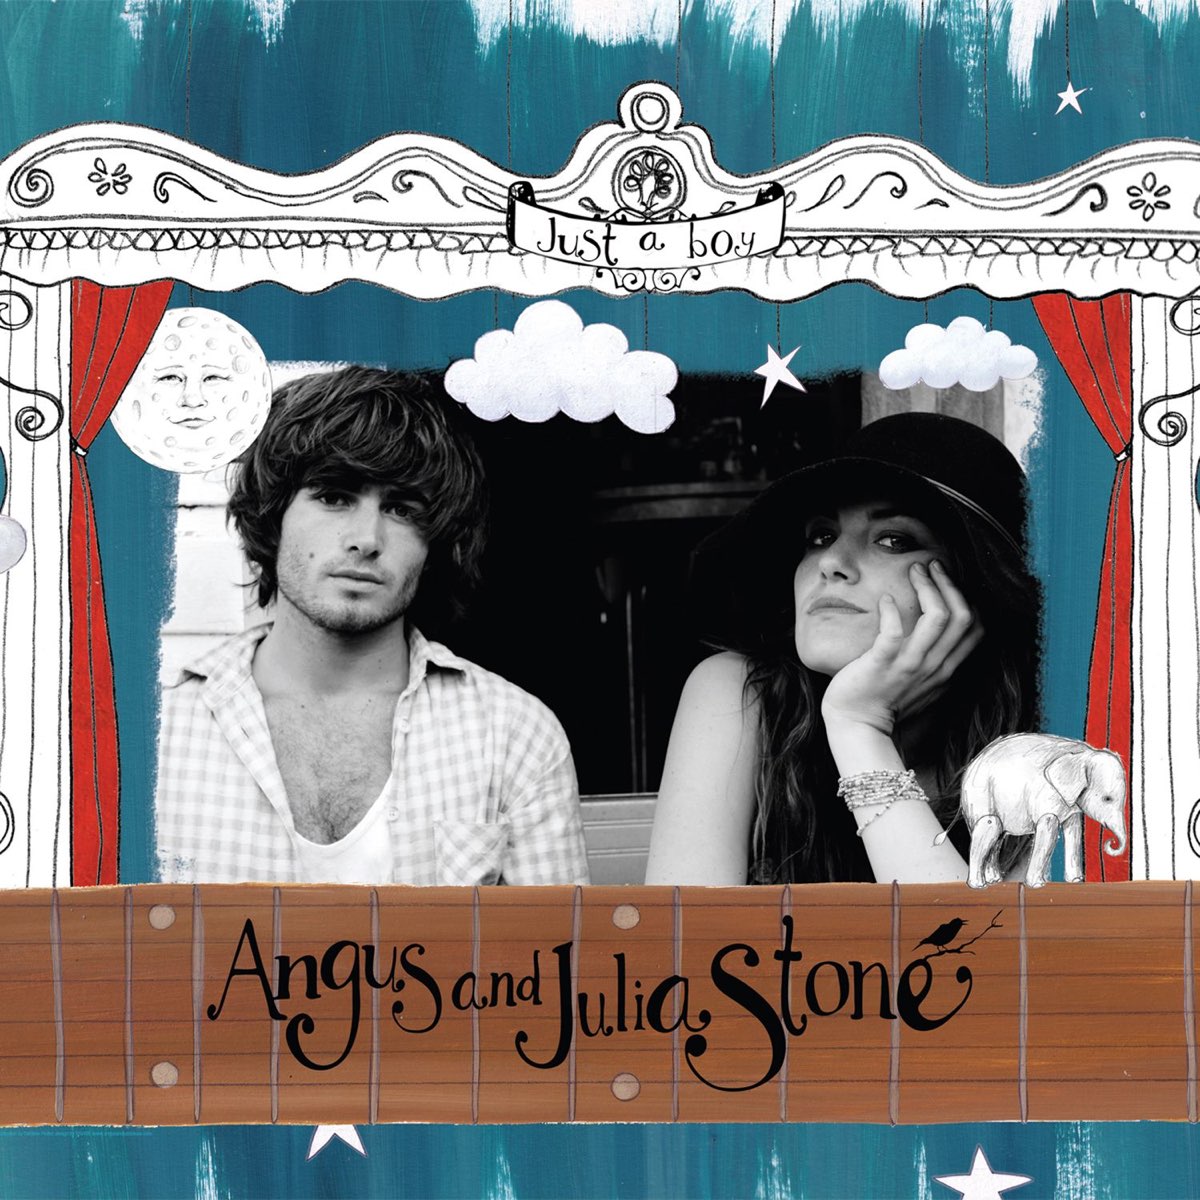 Just stone. Angus Stone исполнитель. Angus & Julia Stone. Angus and Julia Stone just a boy. Angus & Julia Stone for you Спотифи.